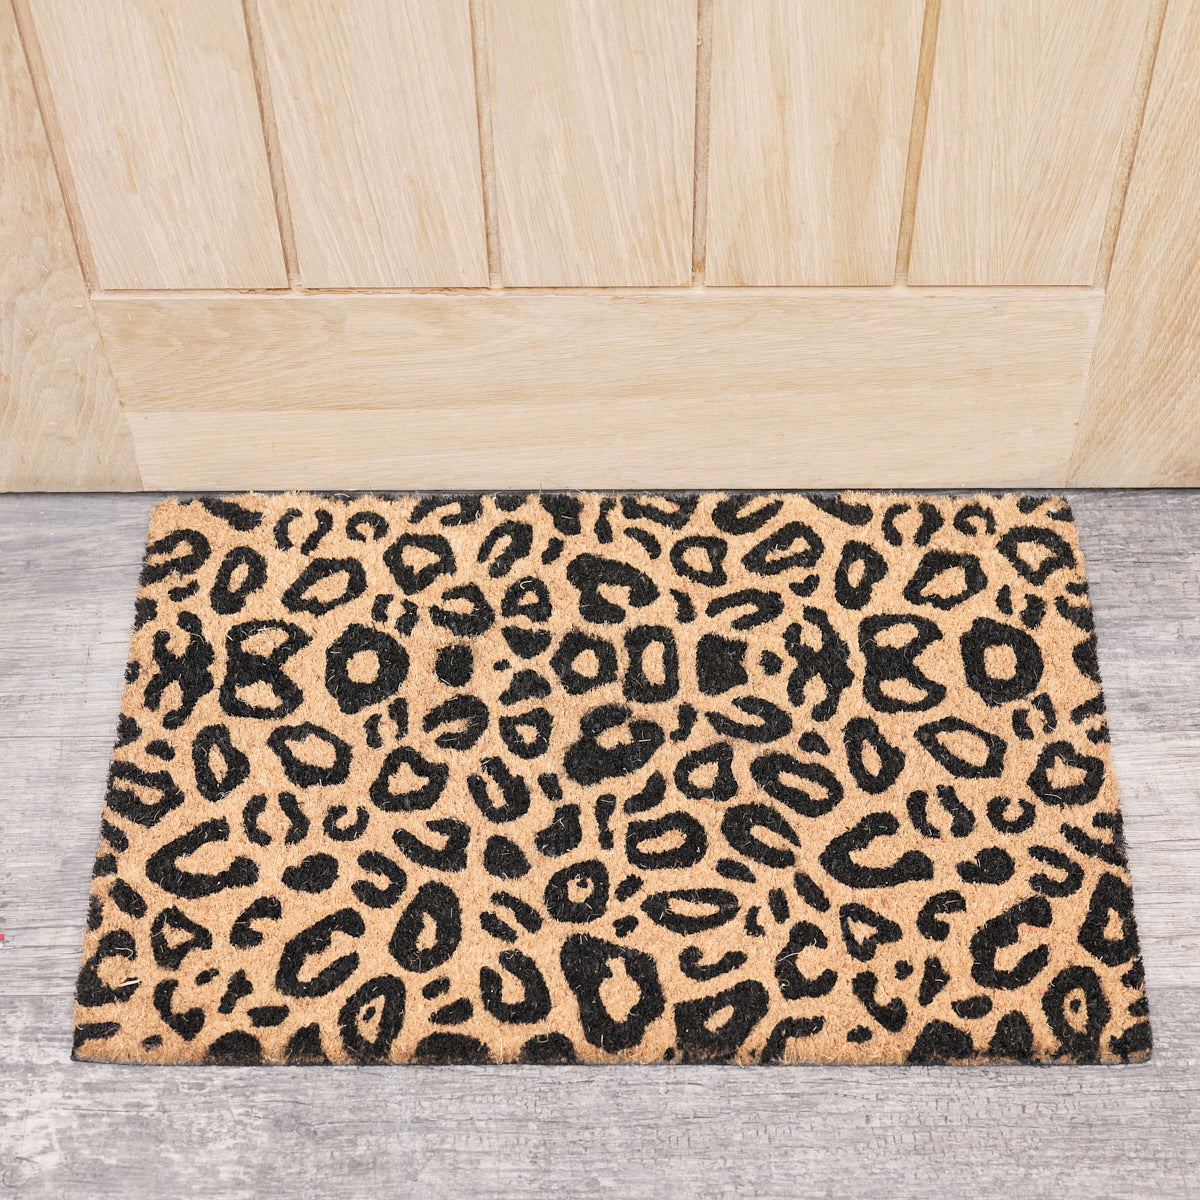 Black & Natural Leopard Print Coir Door Mat